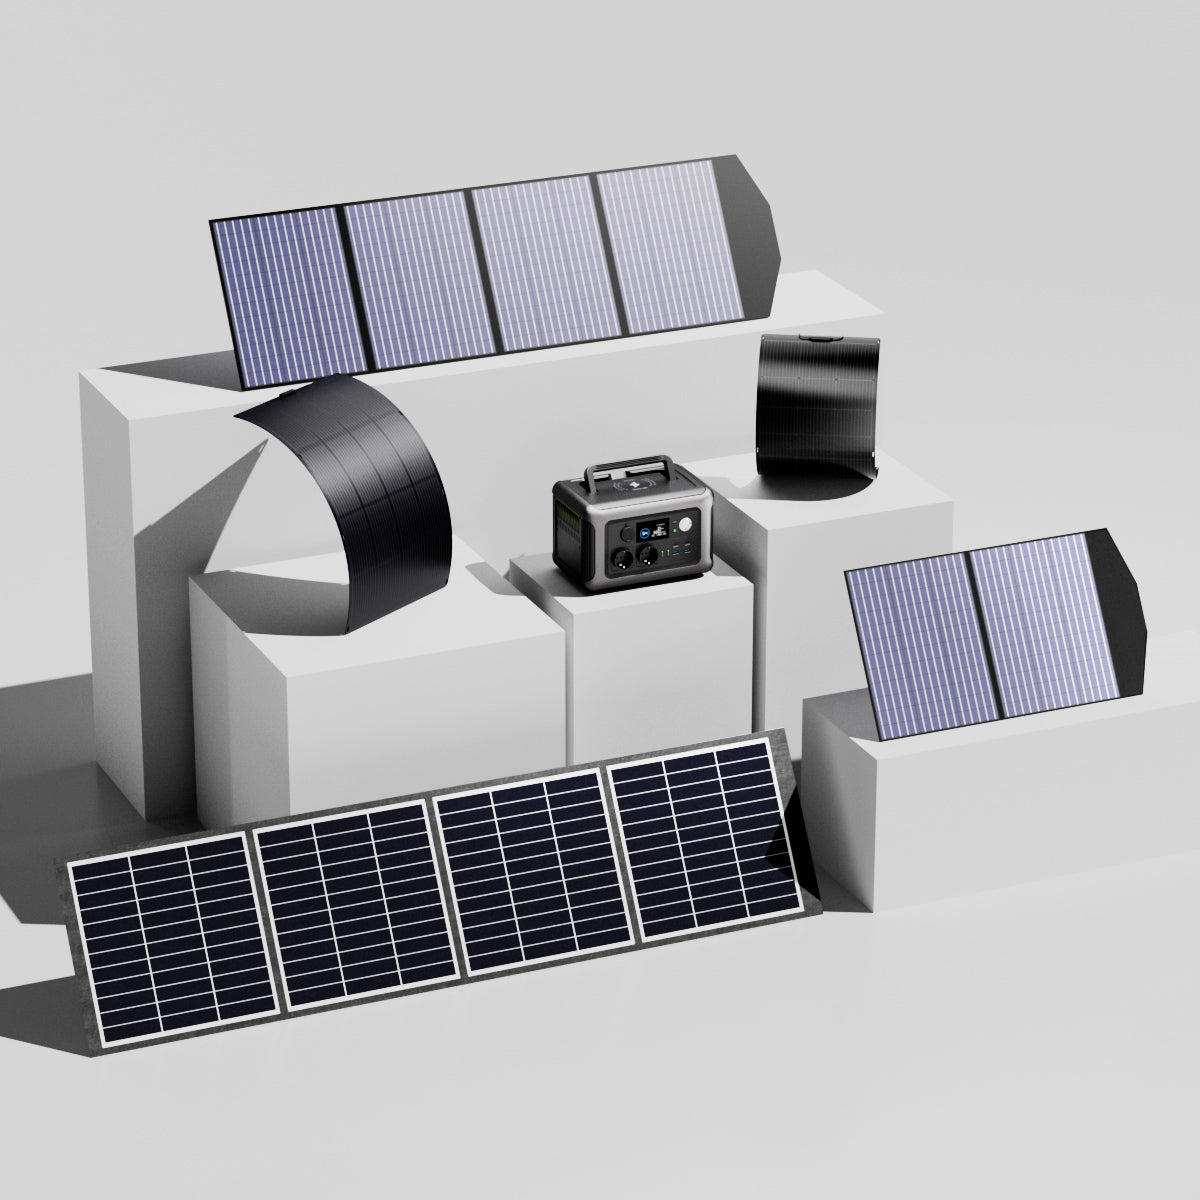 r600-600w-power-station-with-solar-panels-eu.jpg